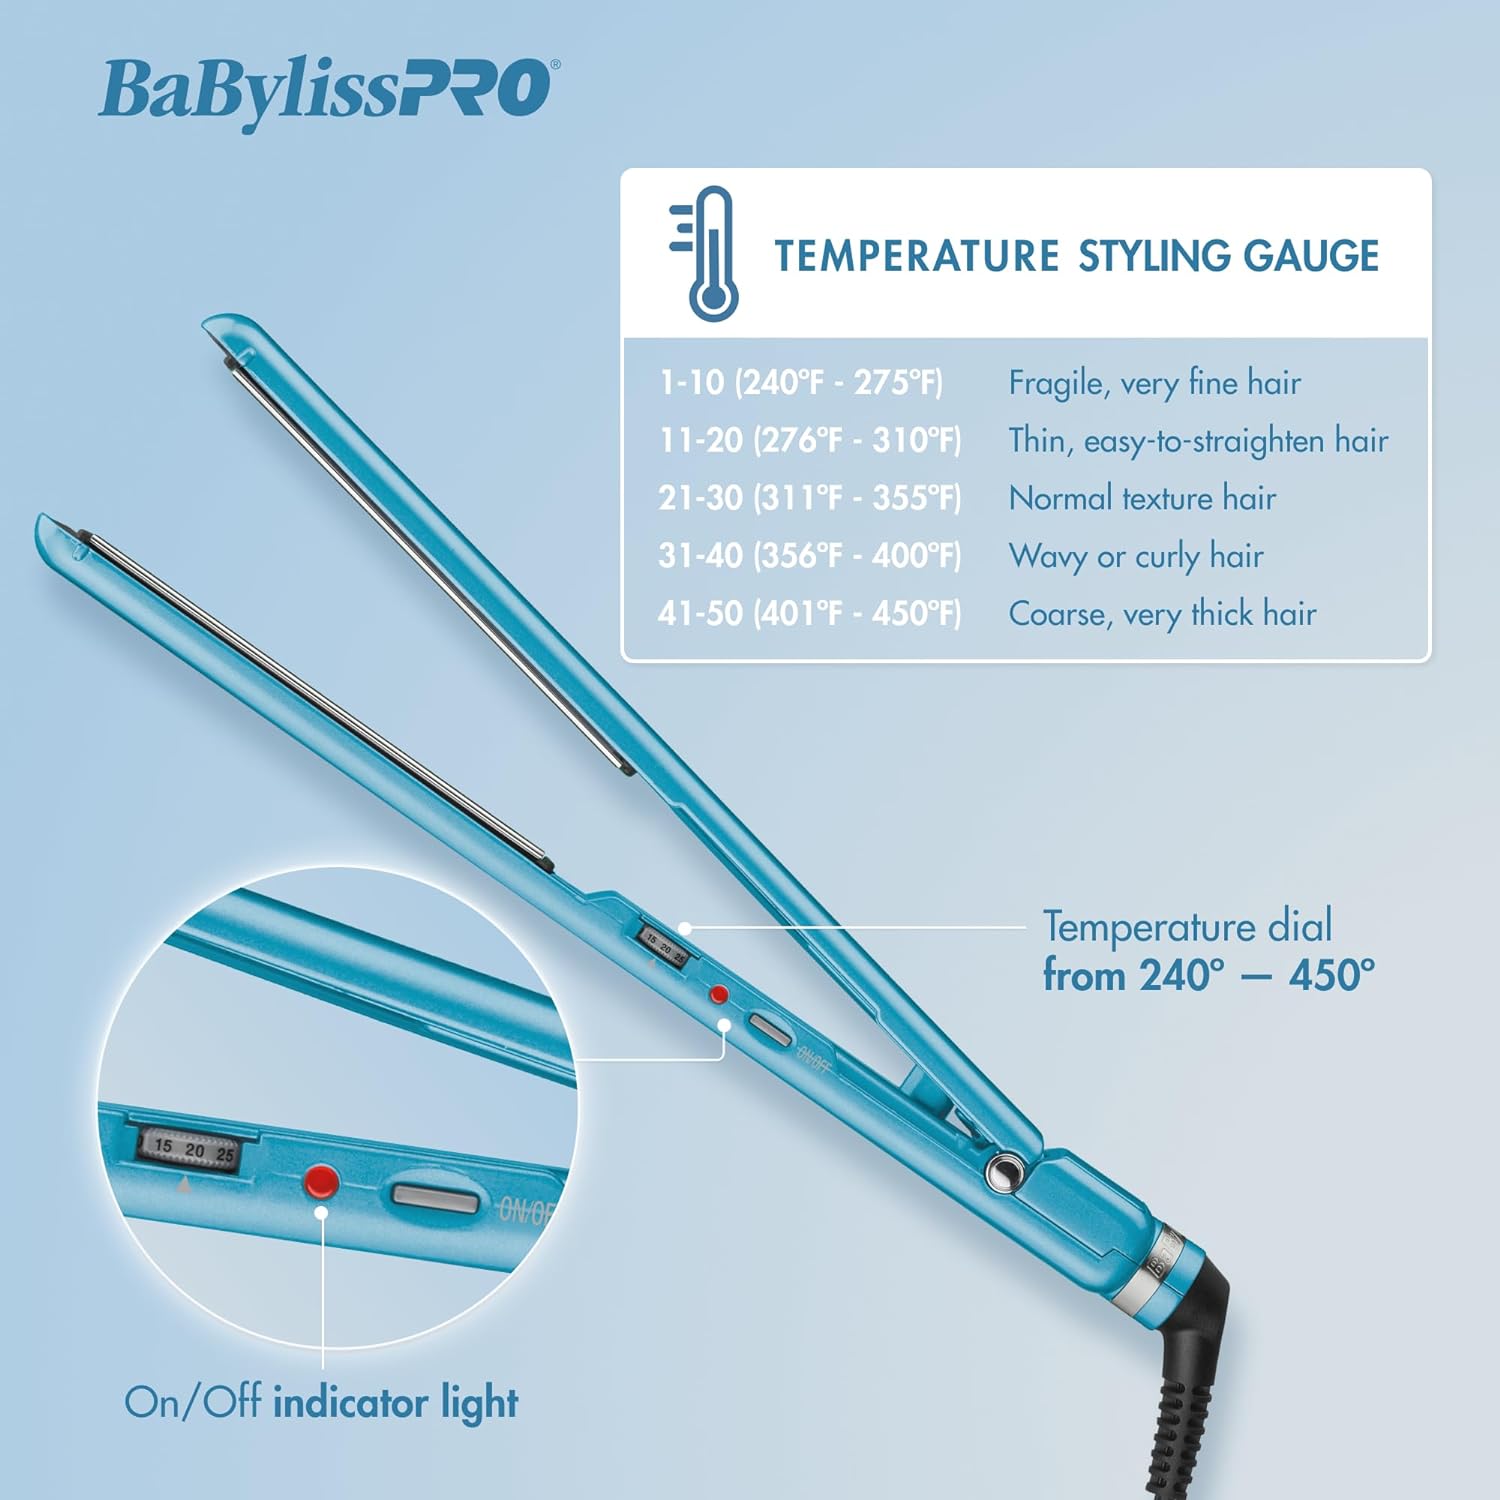 BaBylissPRO Nano Titanium Ultra-Thin Hair Straightener Review